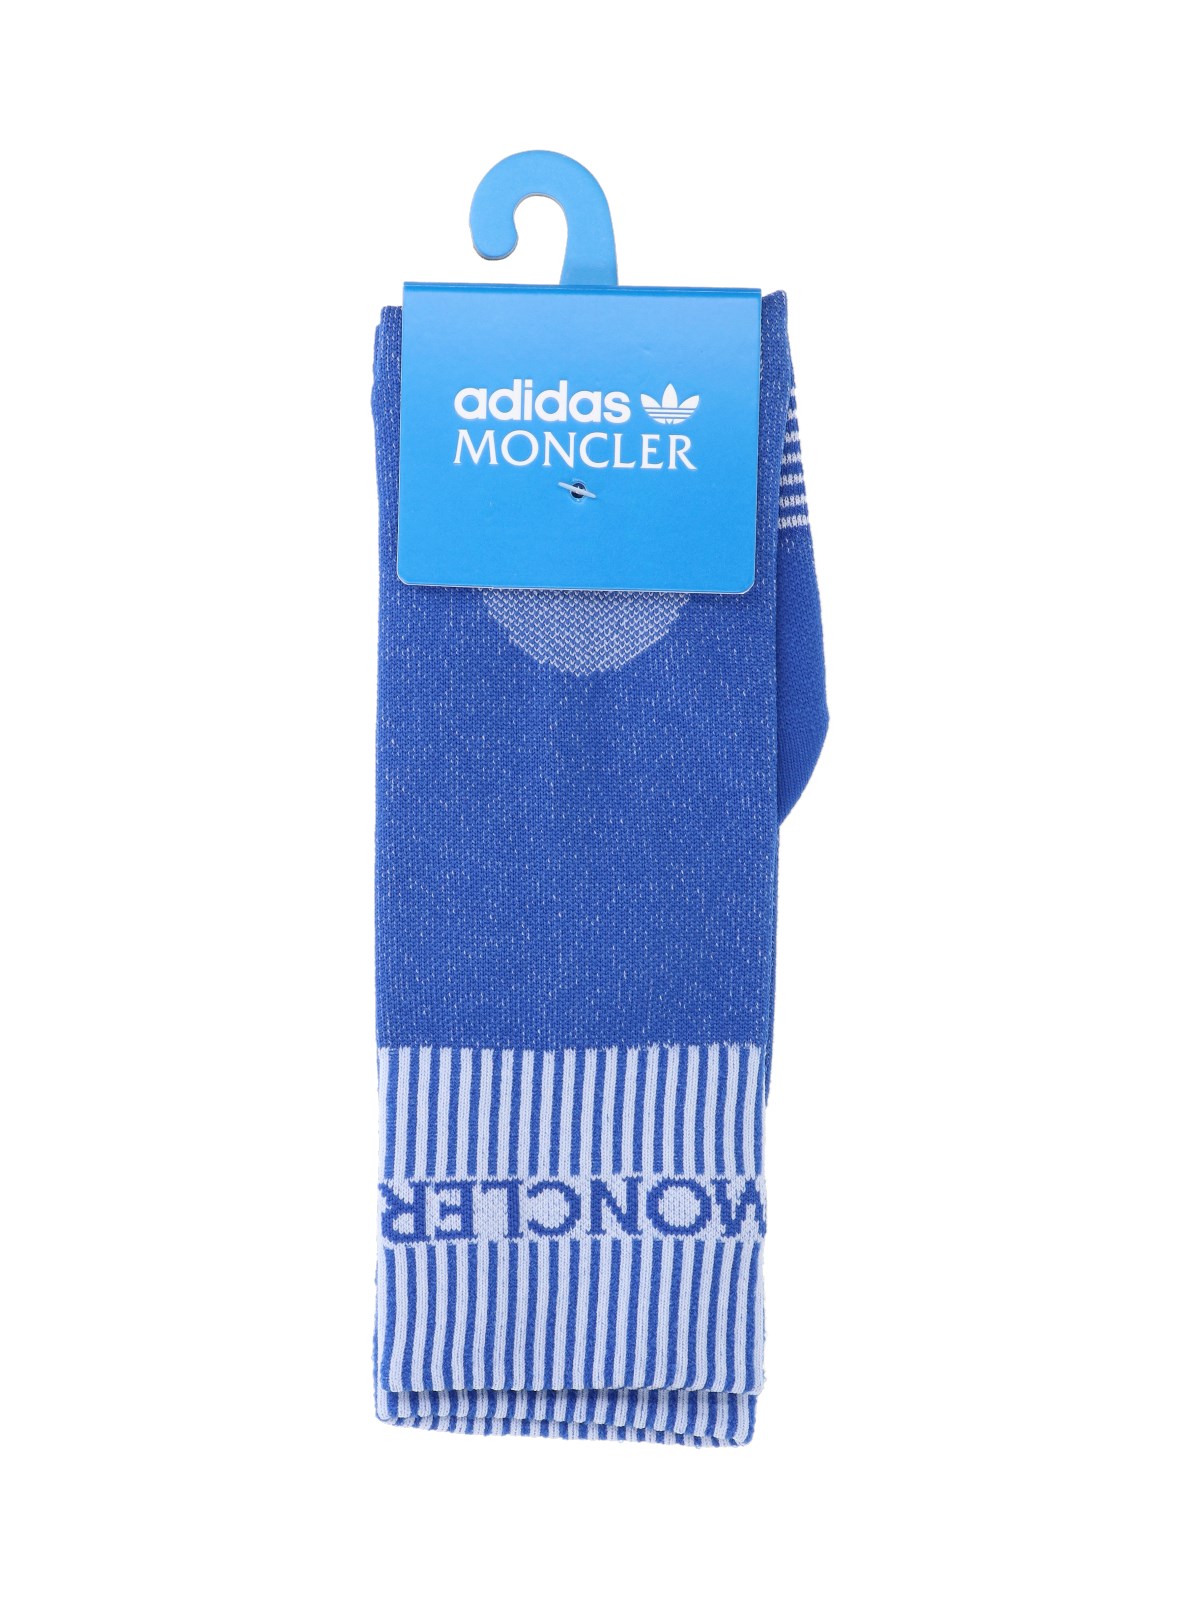 Moncler Genius X Adidas Logo Socks In Blue